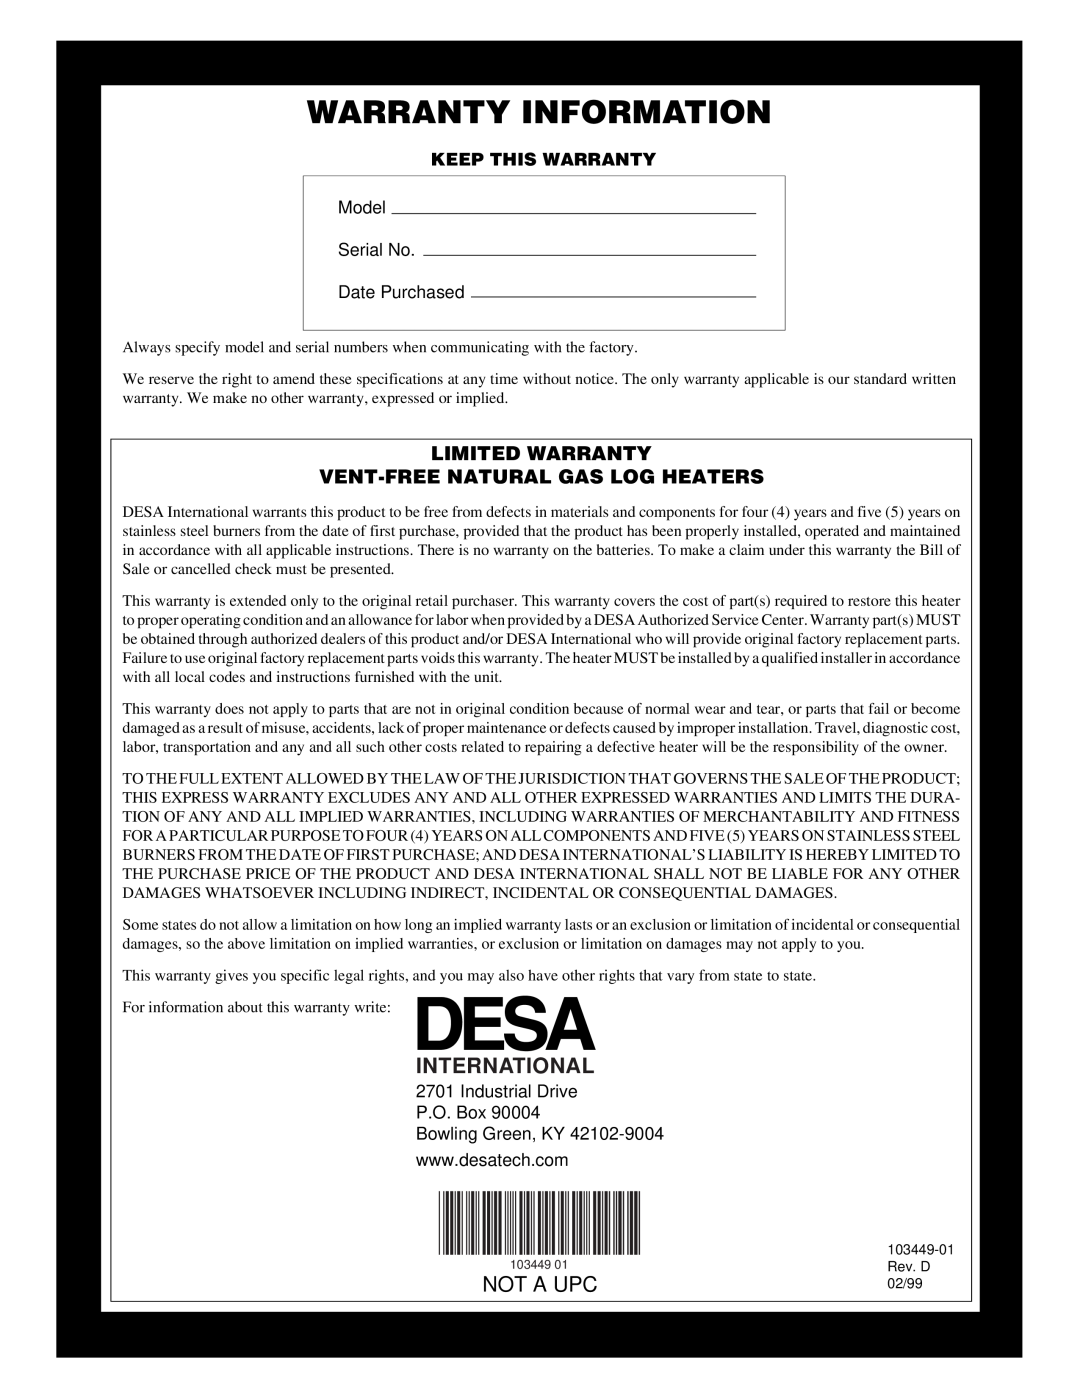 Desa VS18NR, CFS18NR Warranty Information, International, Not A Upc, Limited Warranty Vent-Freenatural Gas Log Heaters 